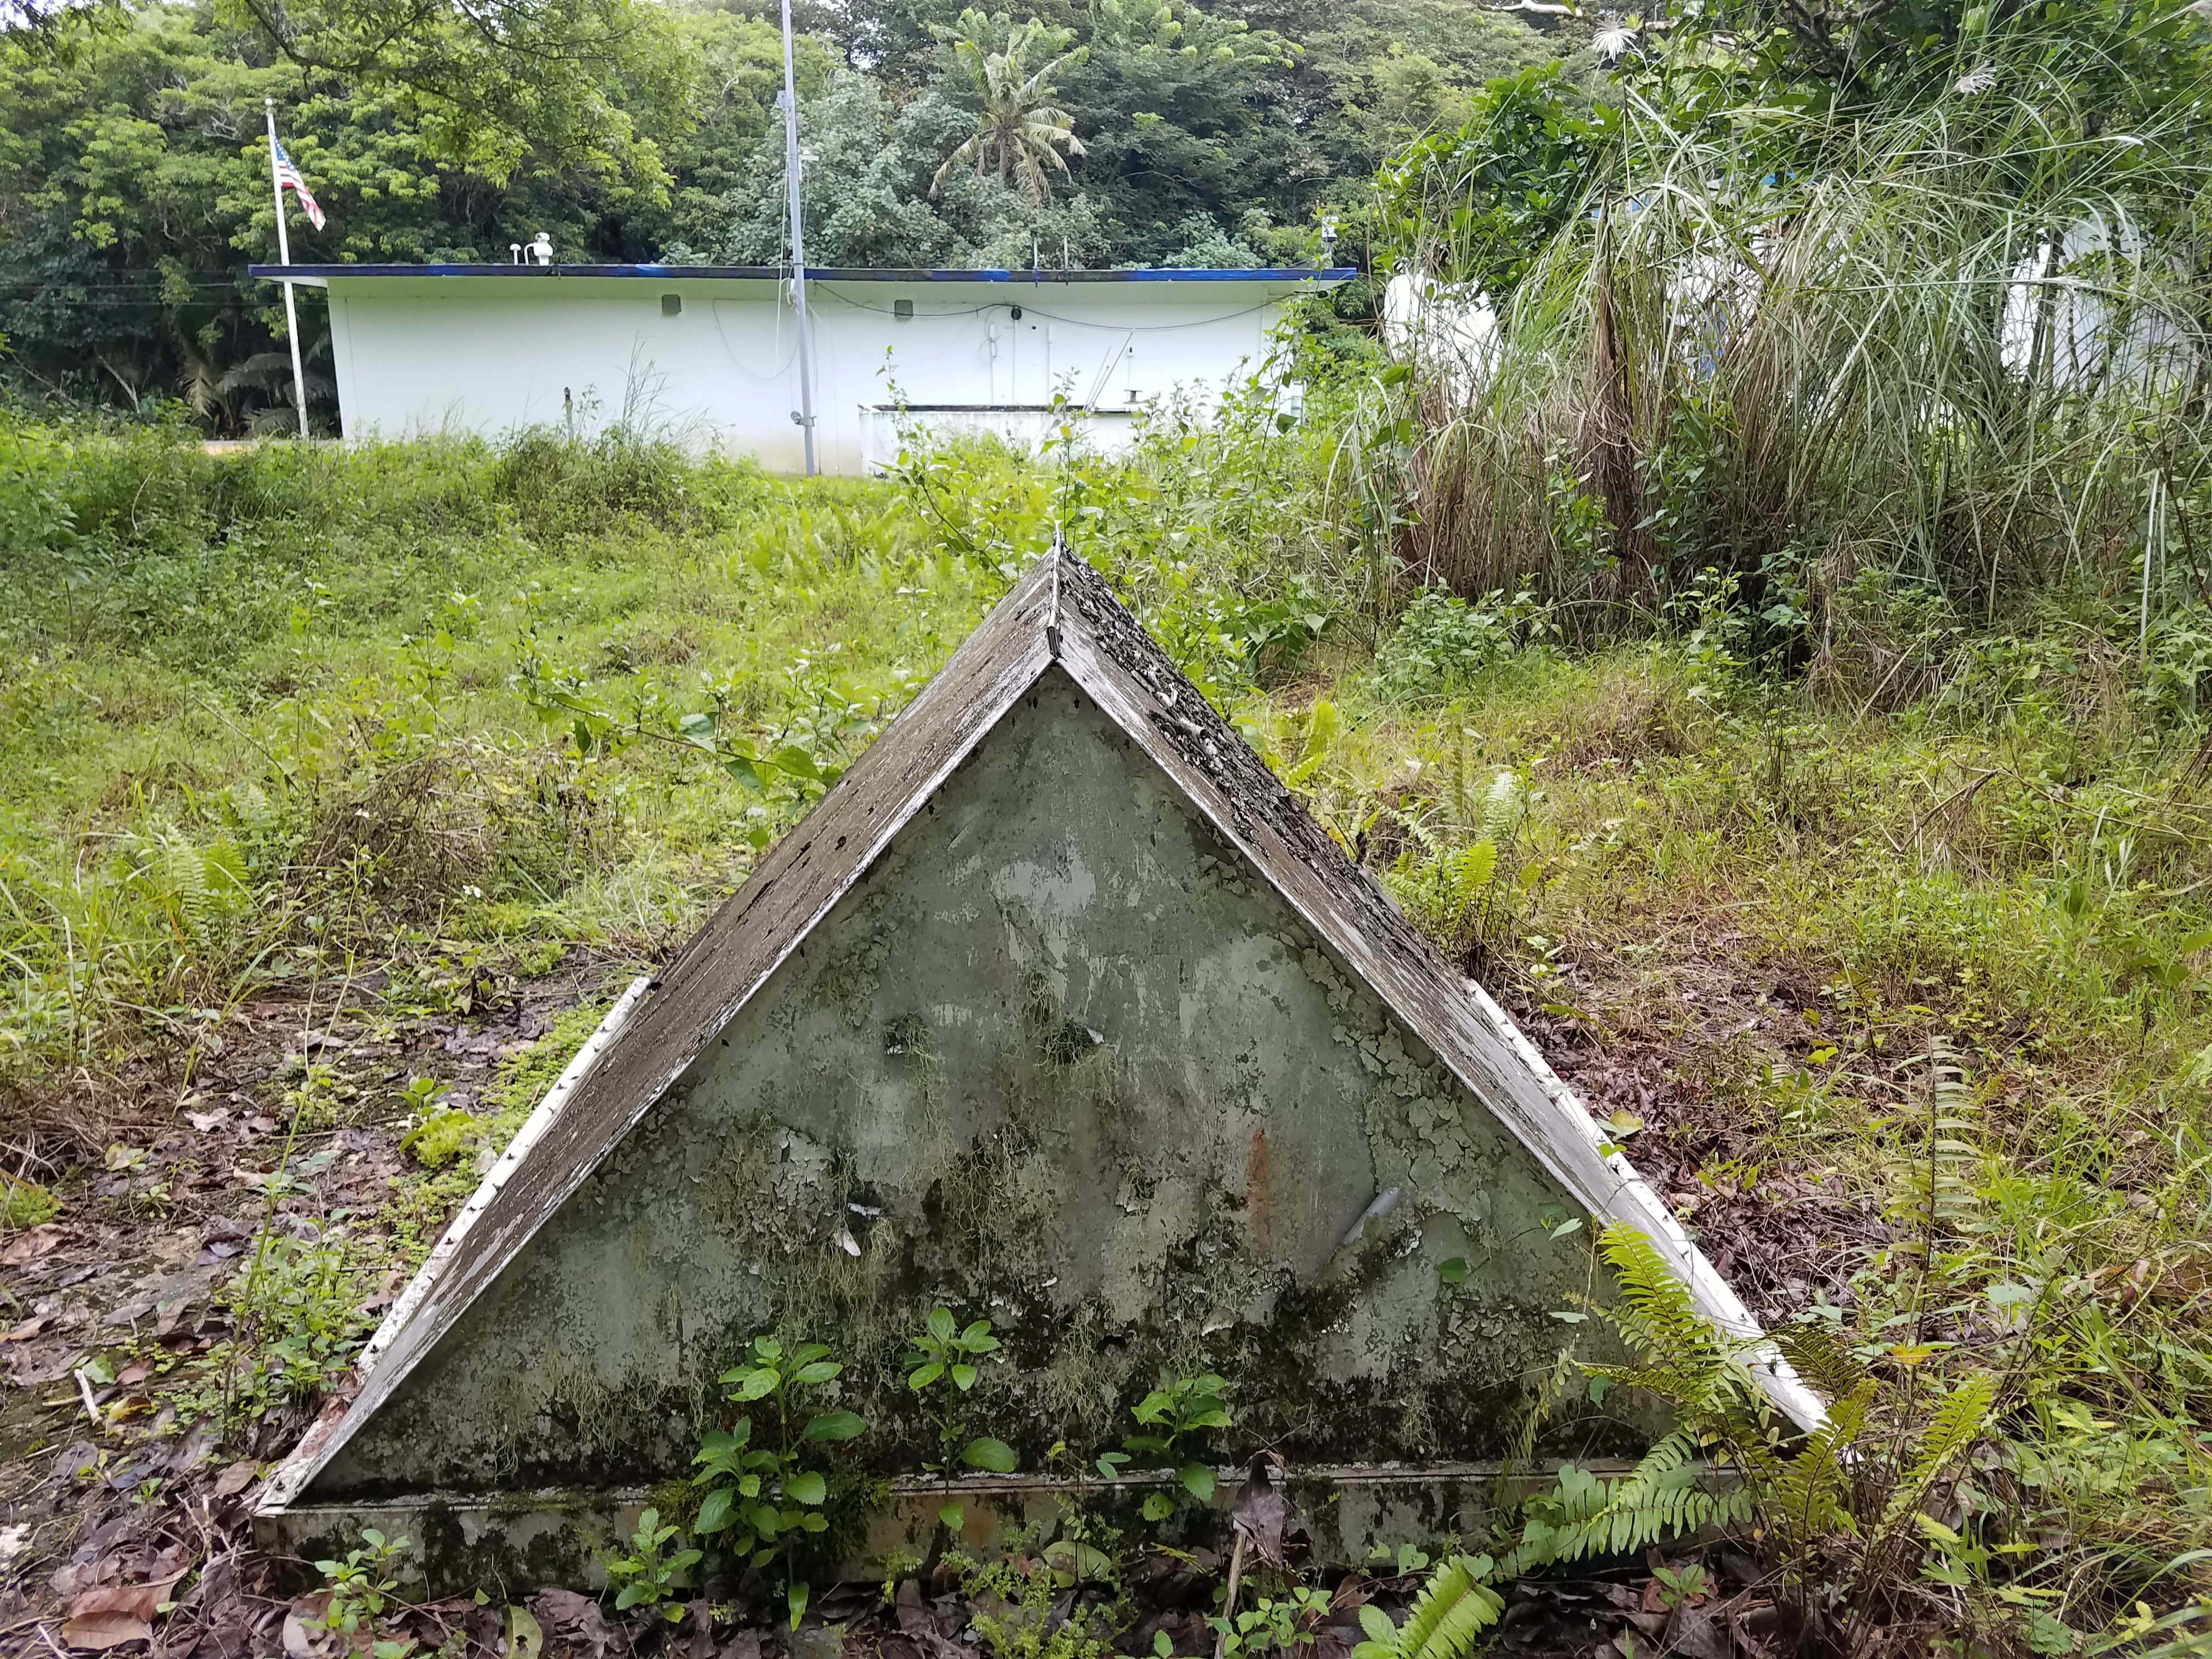 GUMO Station Image. A metal triangle among green wildlife. 